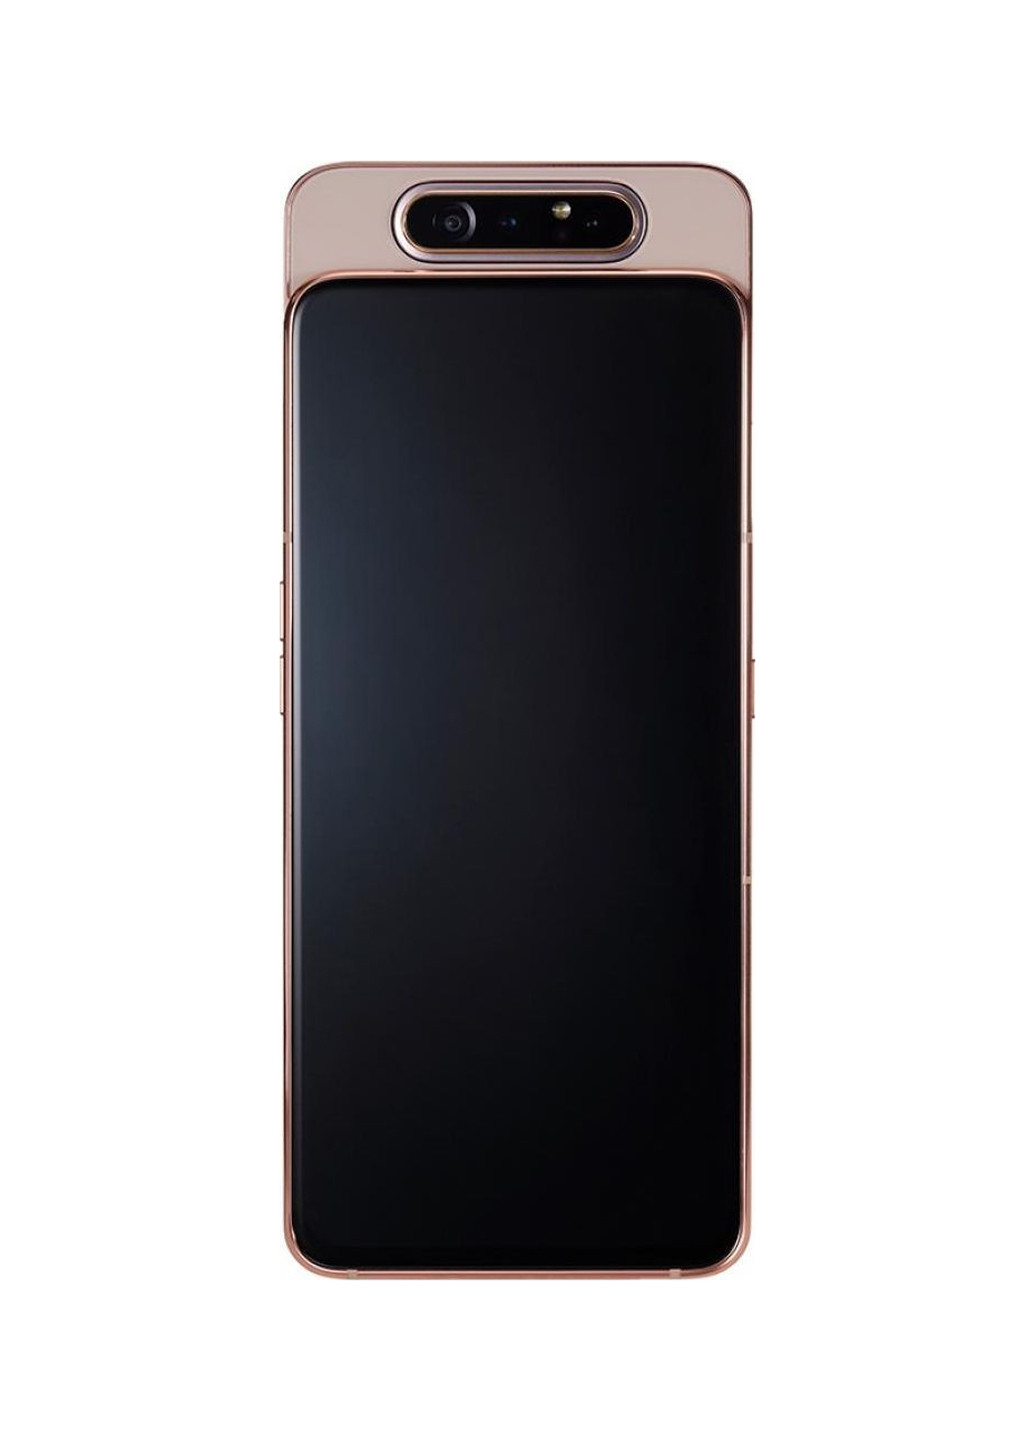 Смартфон Samsung galaxy a80 8/128gb gold (sm-a805fzddsek) (142622131)